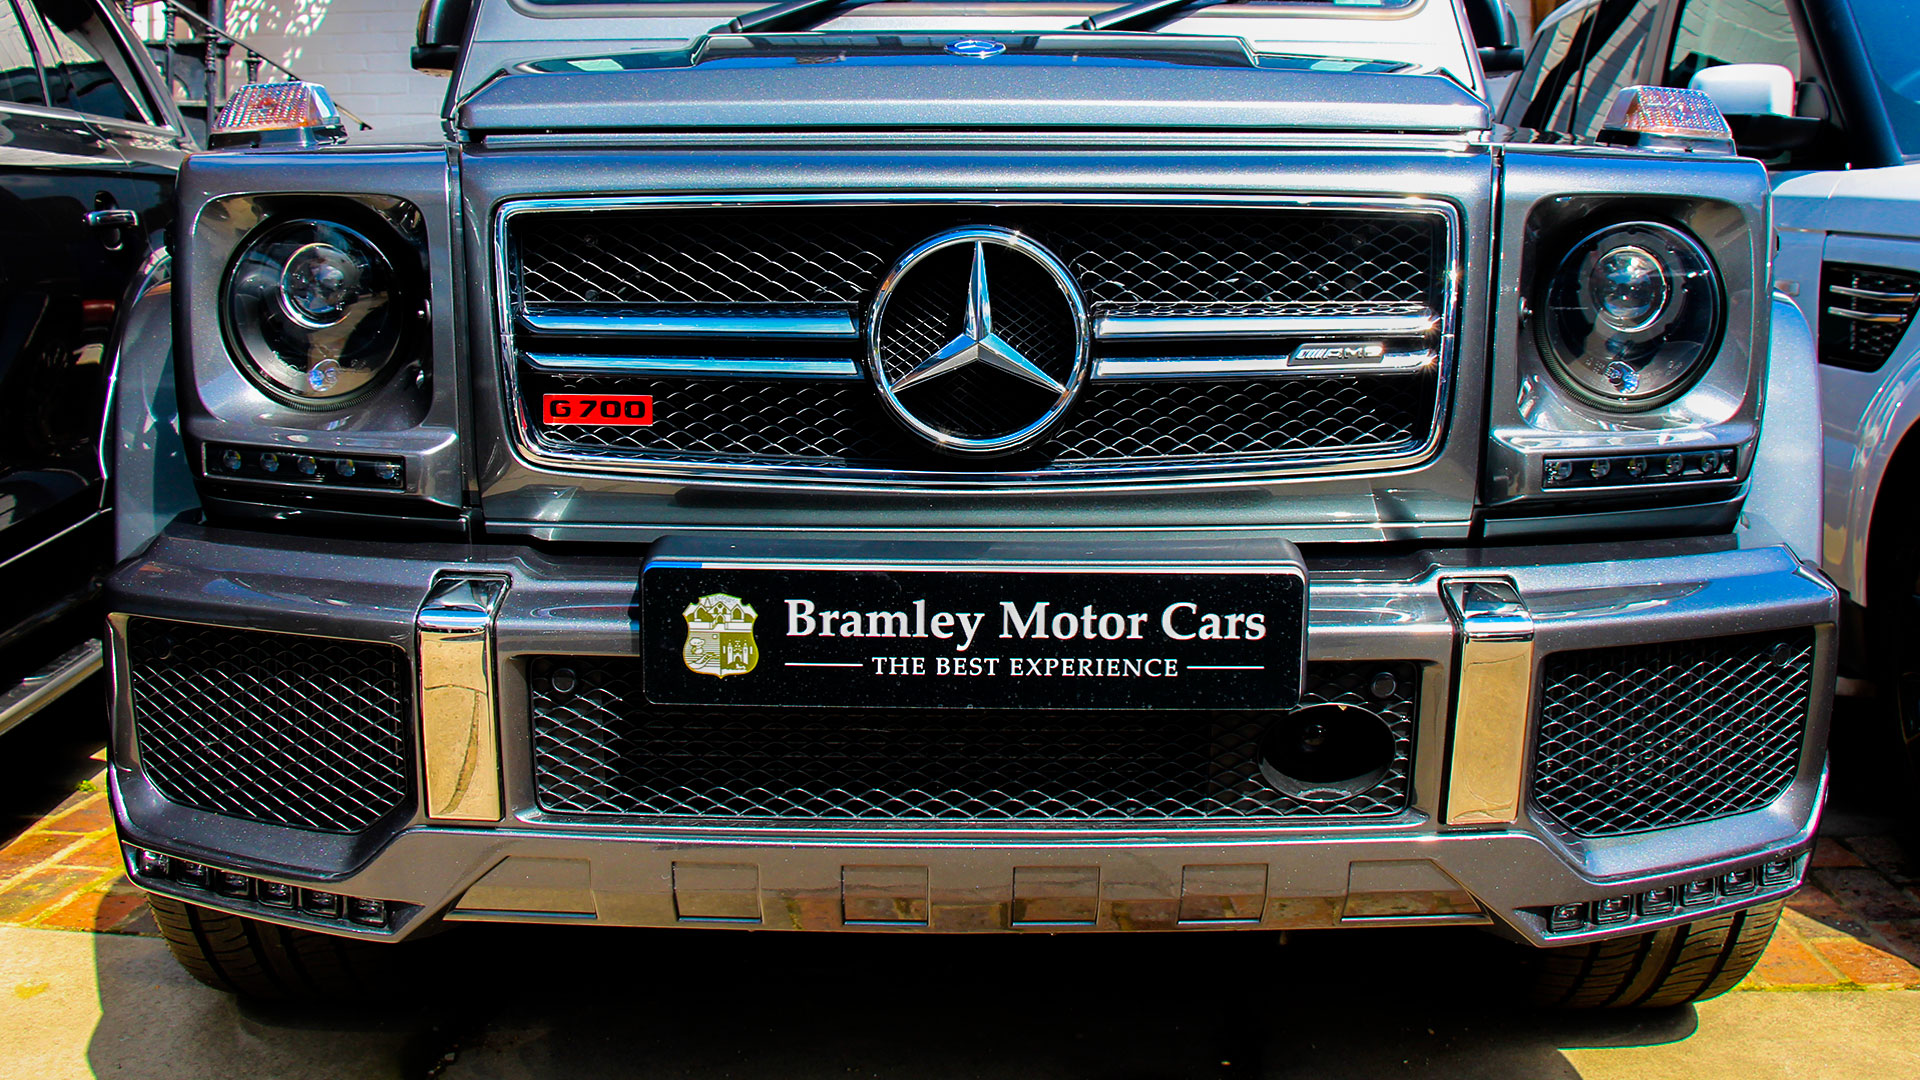 Mercedes car dealers in london #4